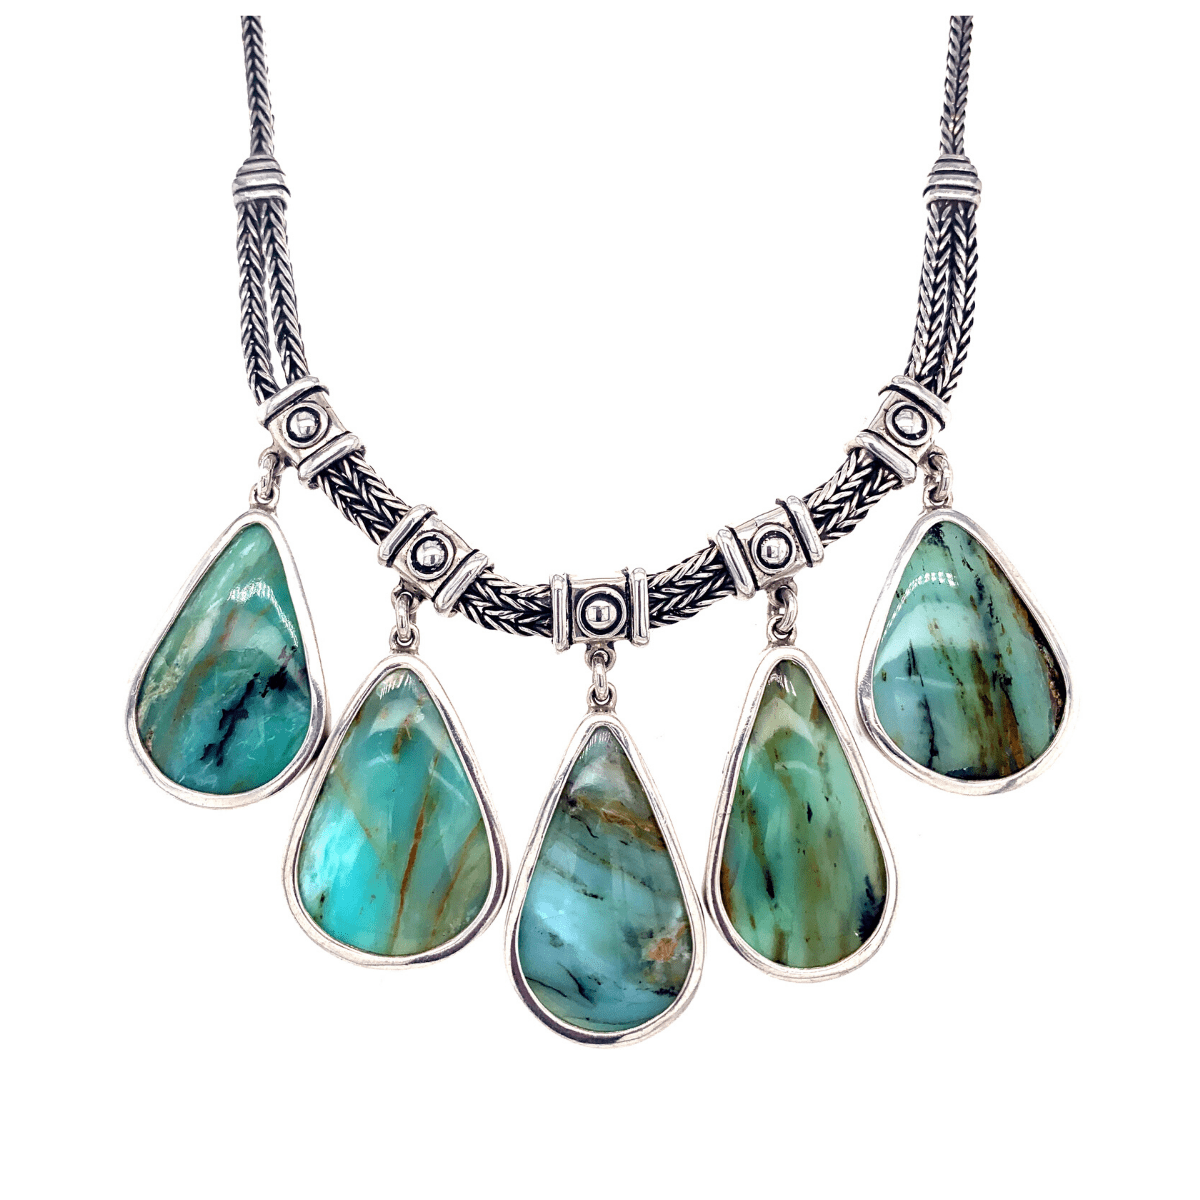 Peruvian Blue Opal Teardrops & Sterling Silver Necklace - Qinti - The Peruvian Shop